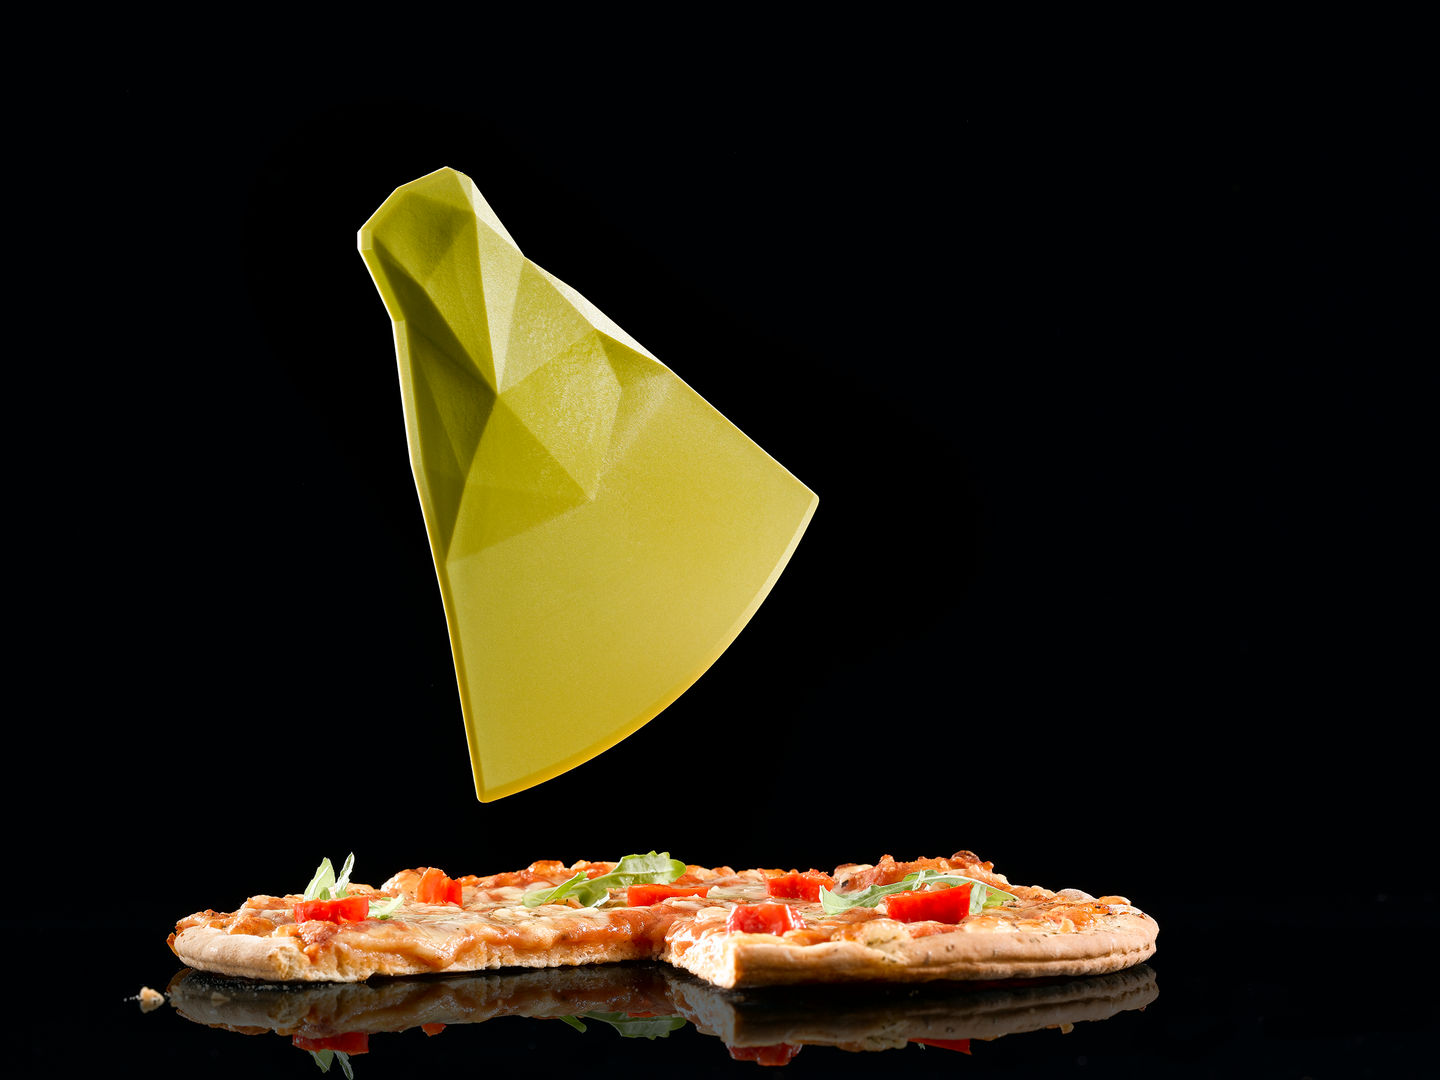 Kant decoupe-spatule a Pizza, ase product - serge atallah ase product - serge atallah Eclectic style kitchen Kitchen utensils